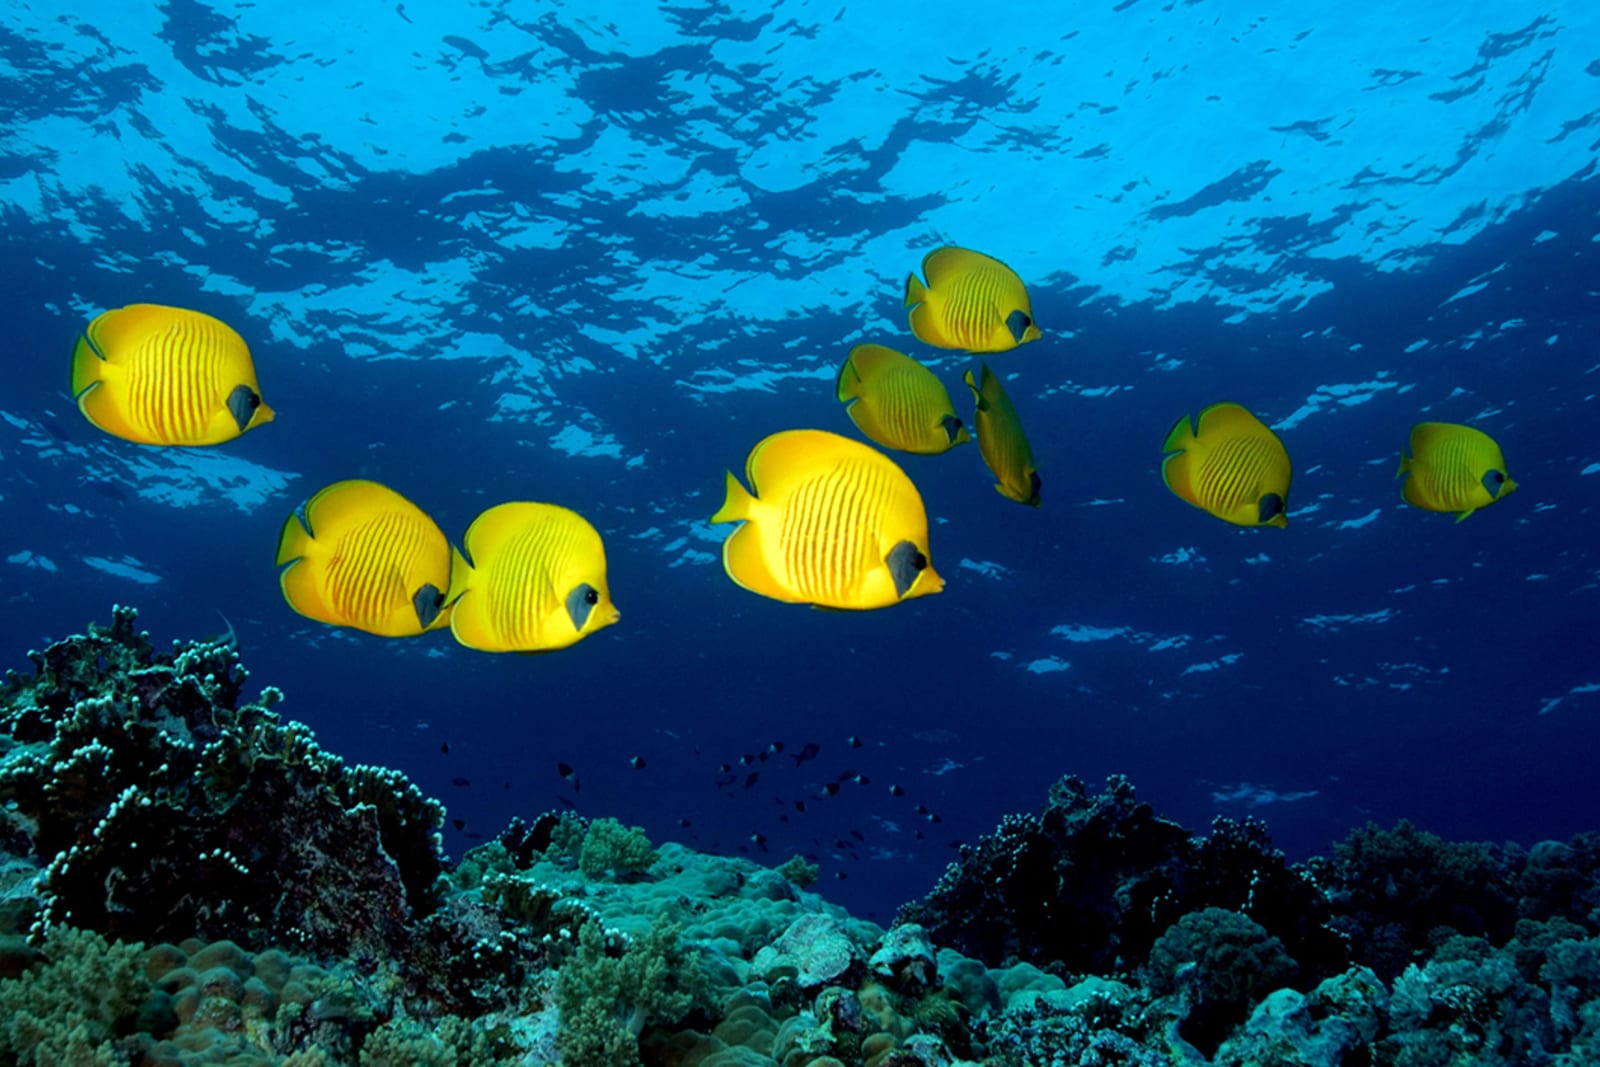 A school of bright yellow fish